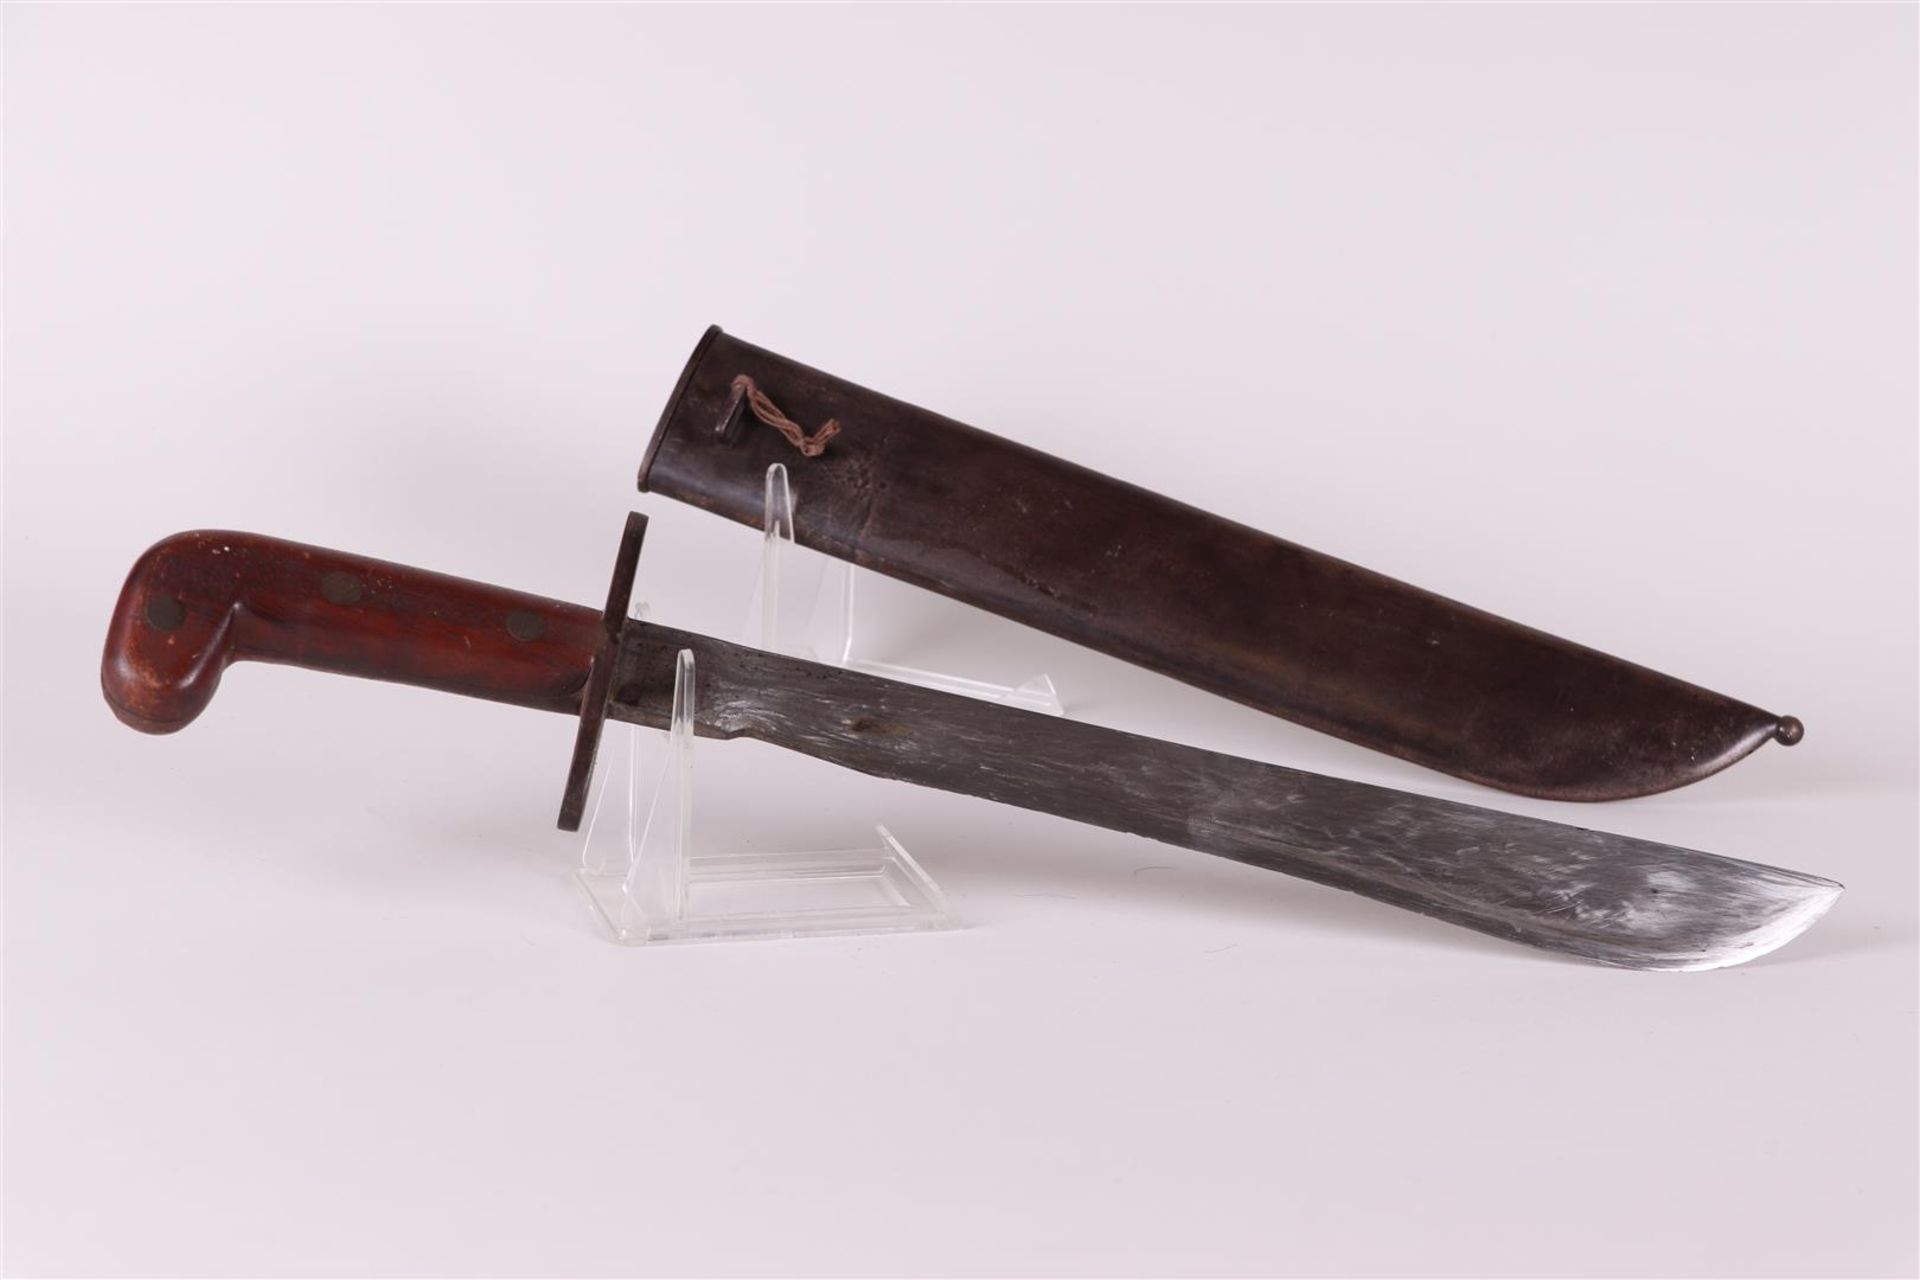 A KNIL (Koninklijk Nederlandsch-Indisch Leger) machete used by the Royal Navy. - Image 2 of 4